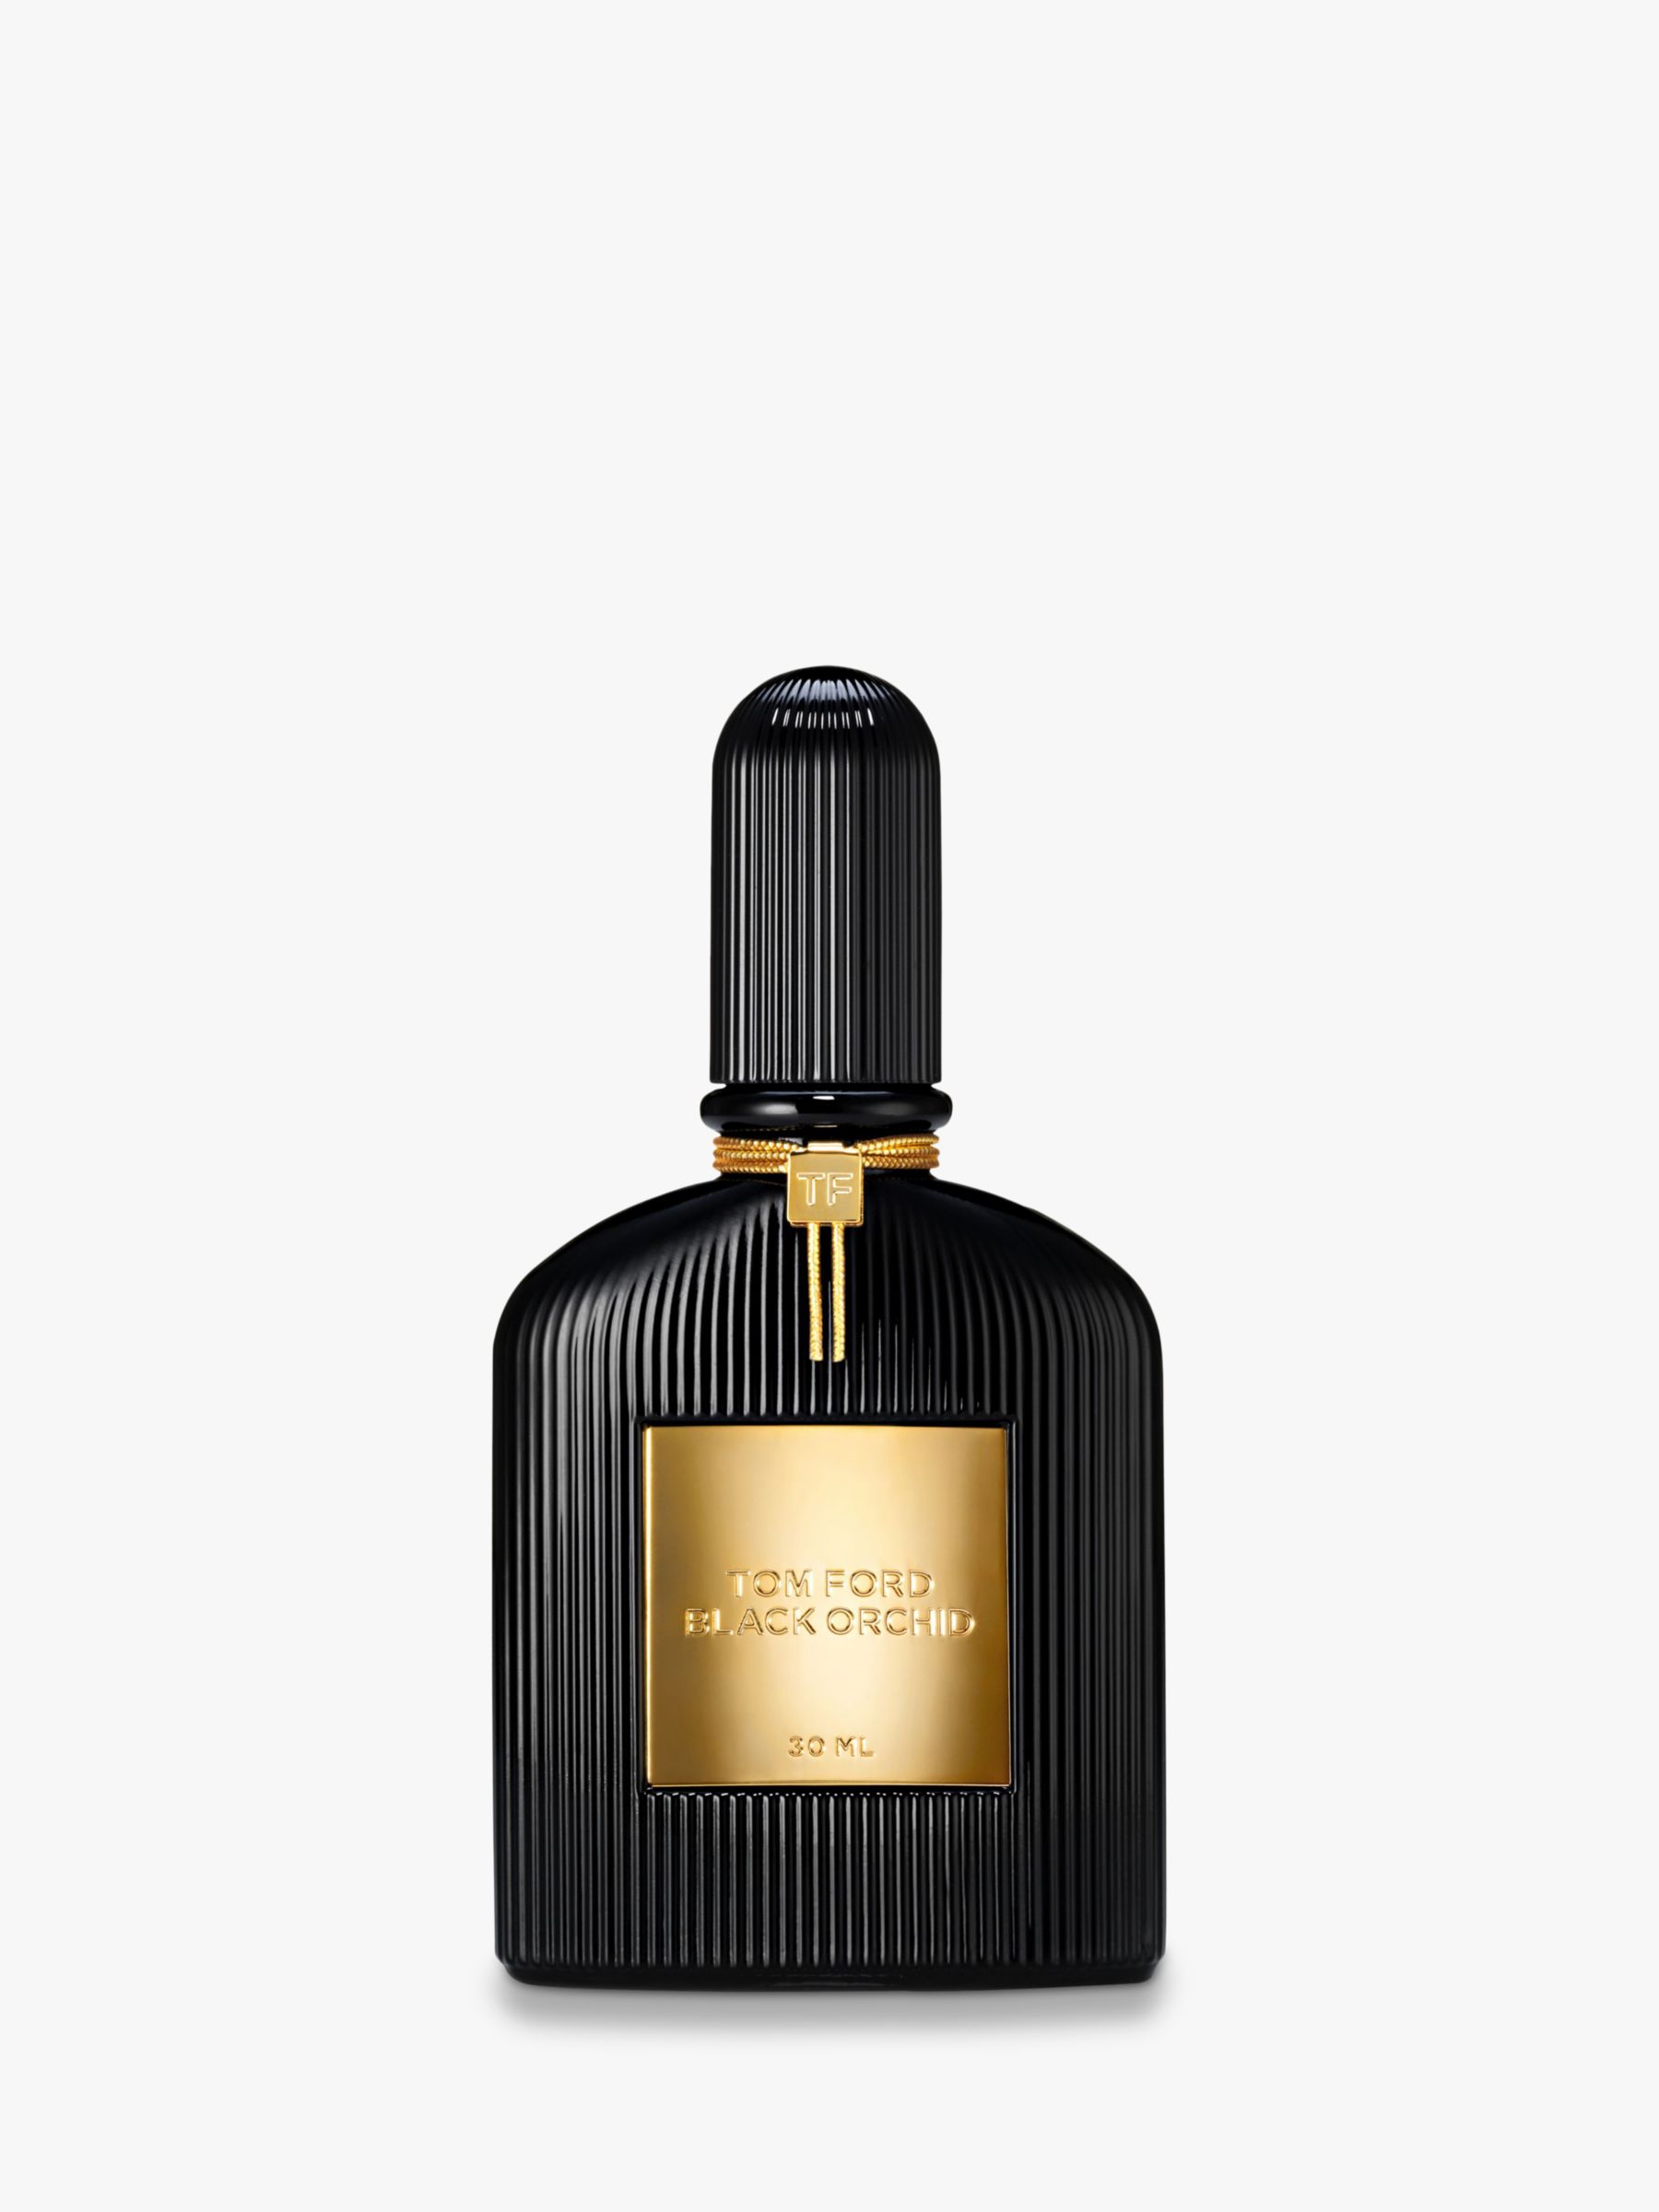 TOM FORD Black Orchid Eau Parfum, 50ml at John Lewis Partners